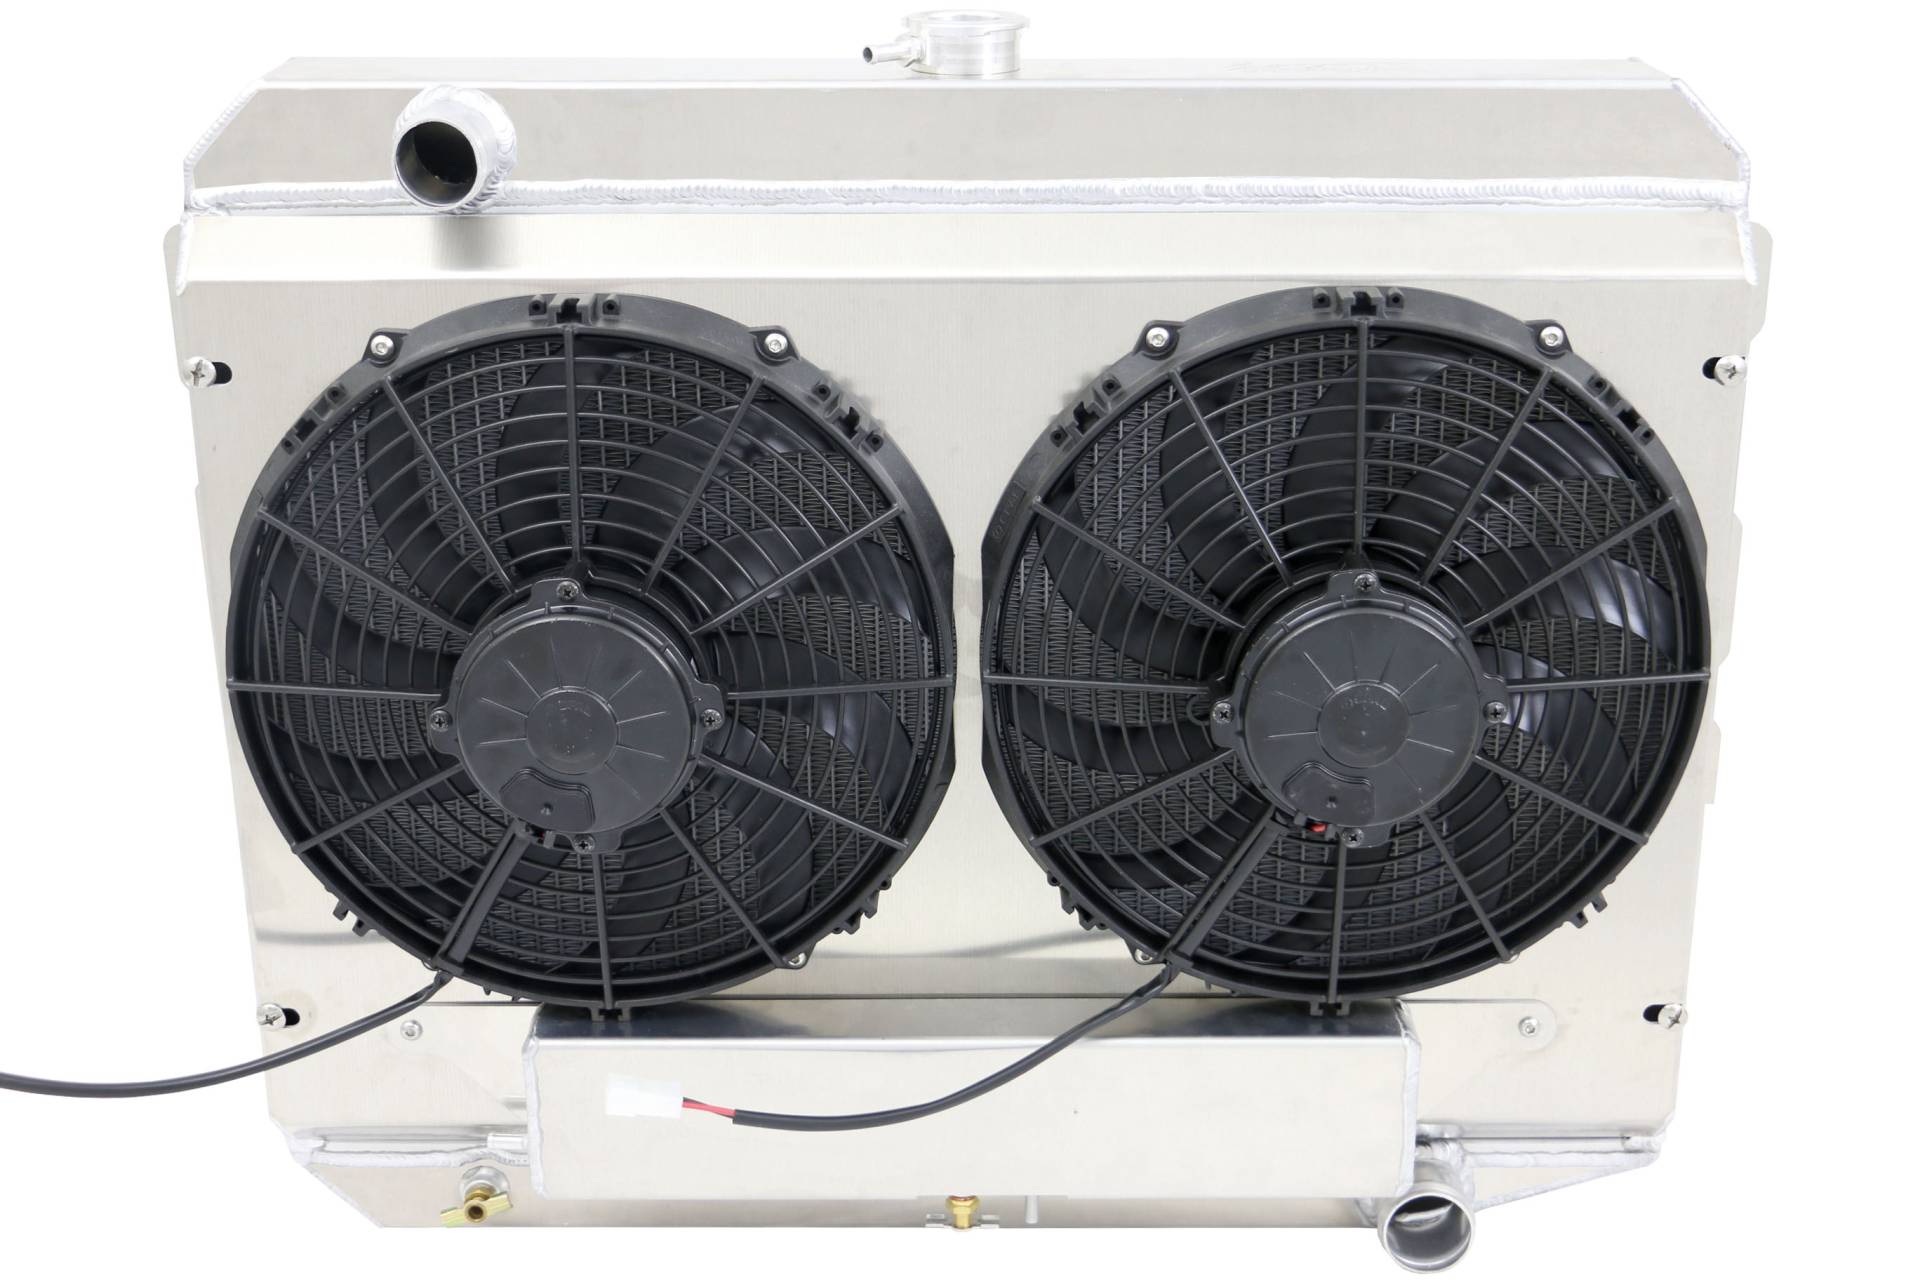 Wizard Cooling Inc - Wizard Cooling - 1970-1973 26" S/B Mopar Applications Aluminum Radiator (w/ MEDIUM PROFILE Fan, Shroud, And Expansion Tank) - 374-102MDX